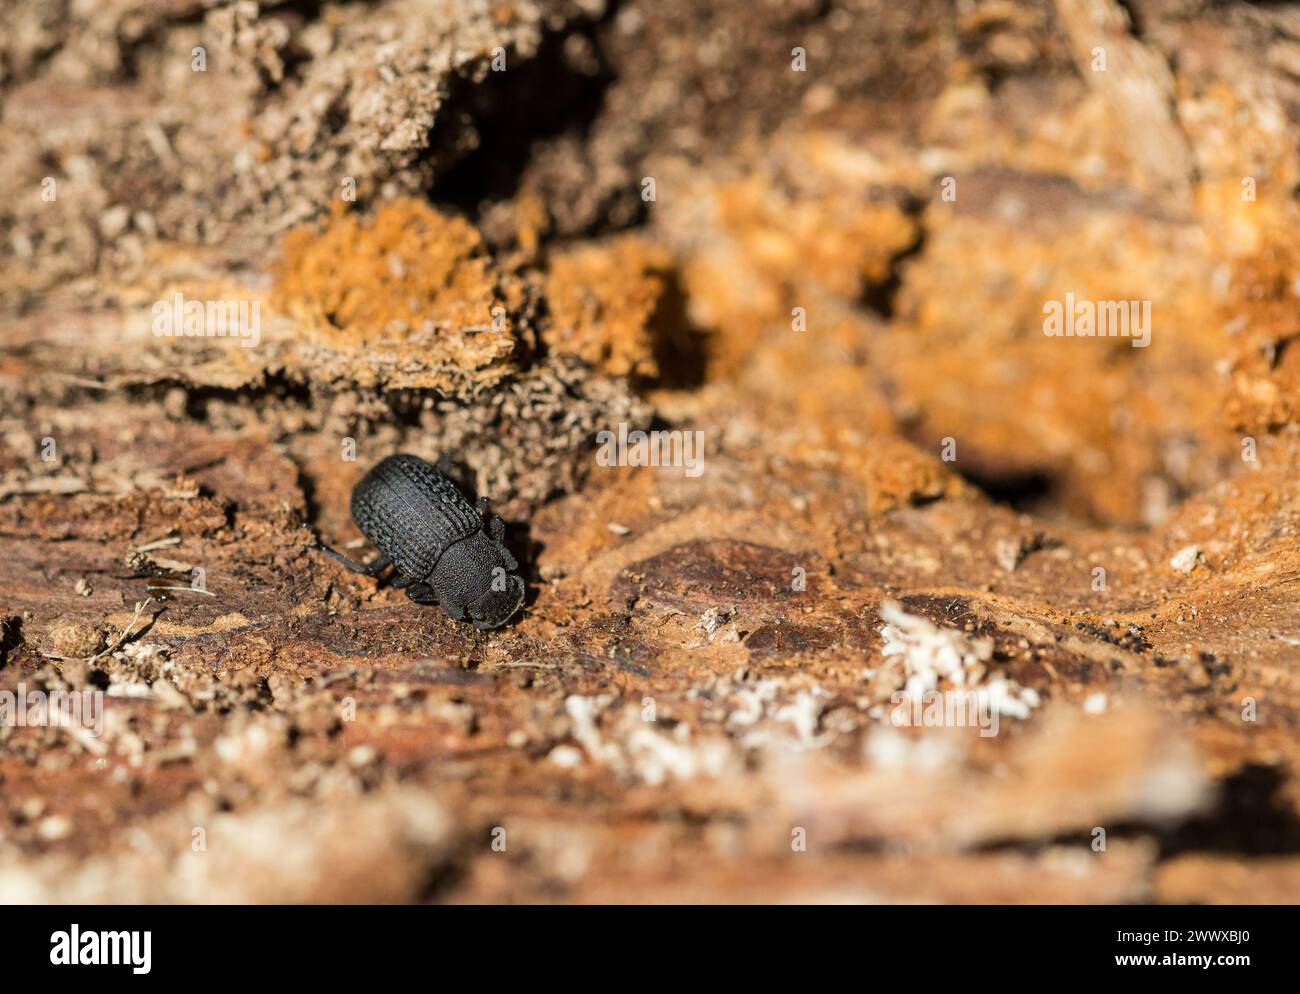 Darkling beetle (Bolitophagus reticulatus) Stock Photo